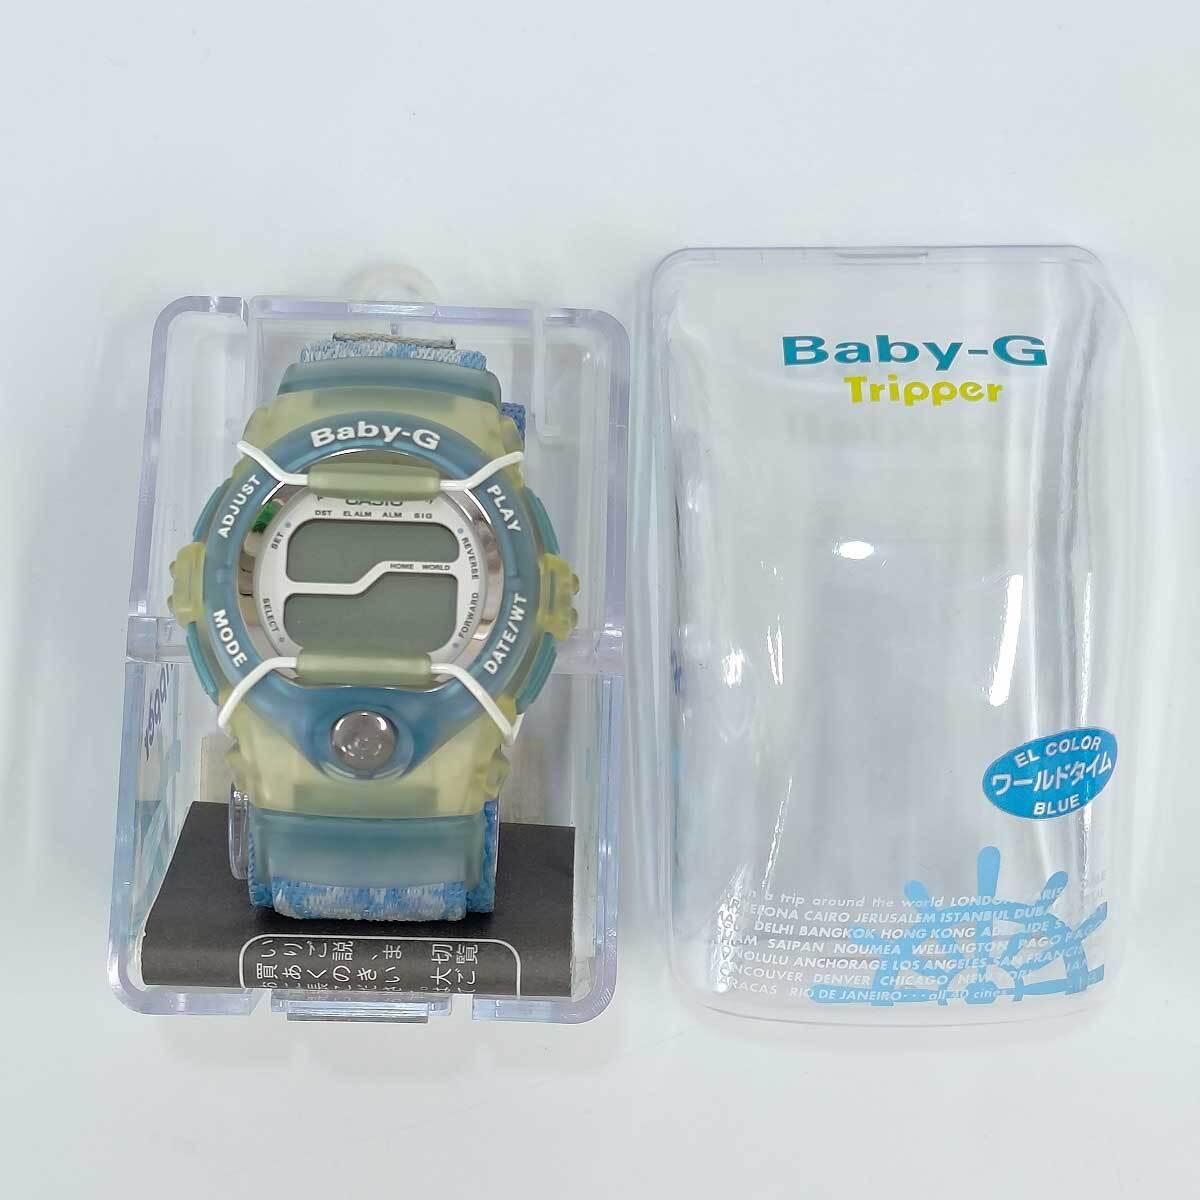 [ used ] Casio Baby-G Tripper Bay Be G G-SHOCK Pacific blue BGT-100V-2T lady's CASIO